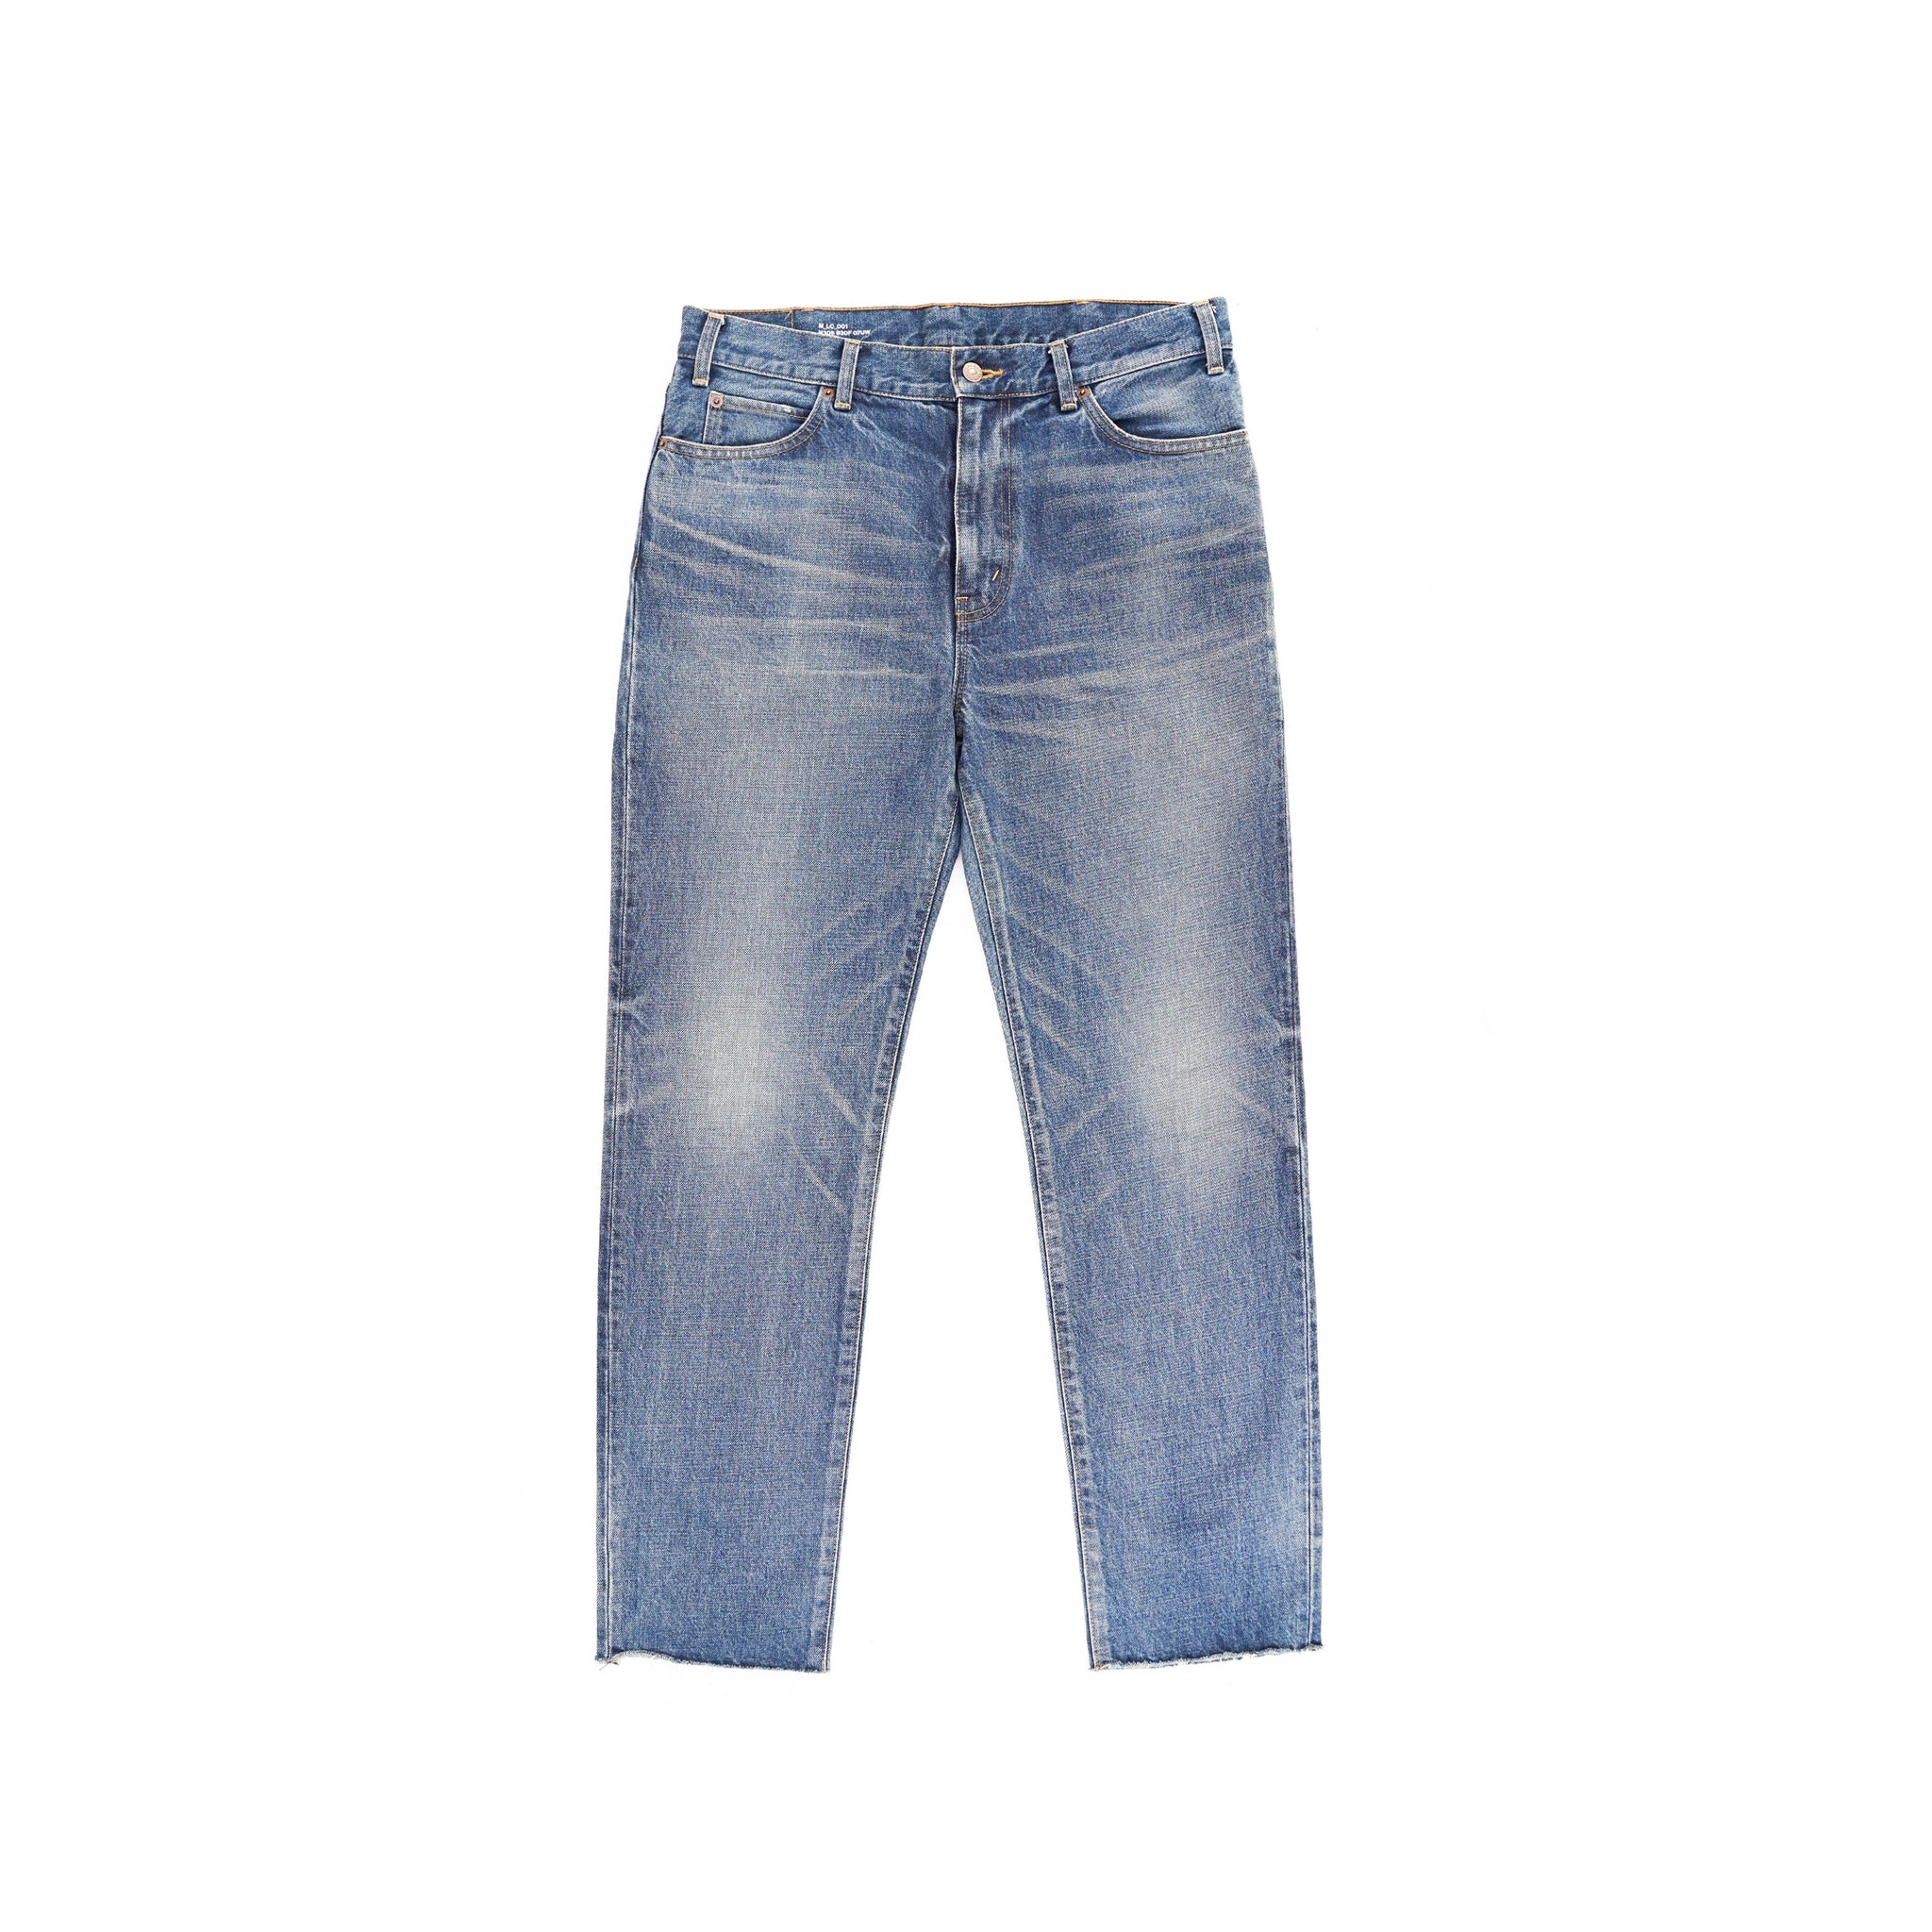 G-Star Raw Heller Low Men Blue Straight Regular Jeans 29x32 Medium Wash  Denim | eBay